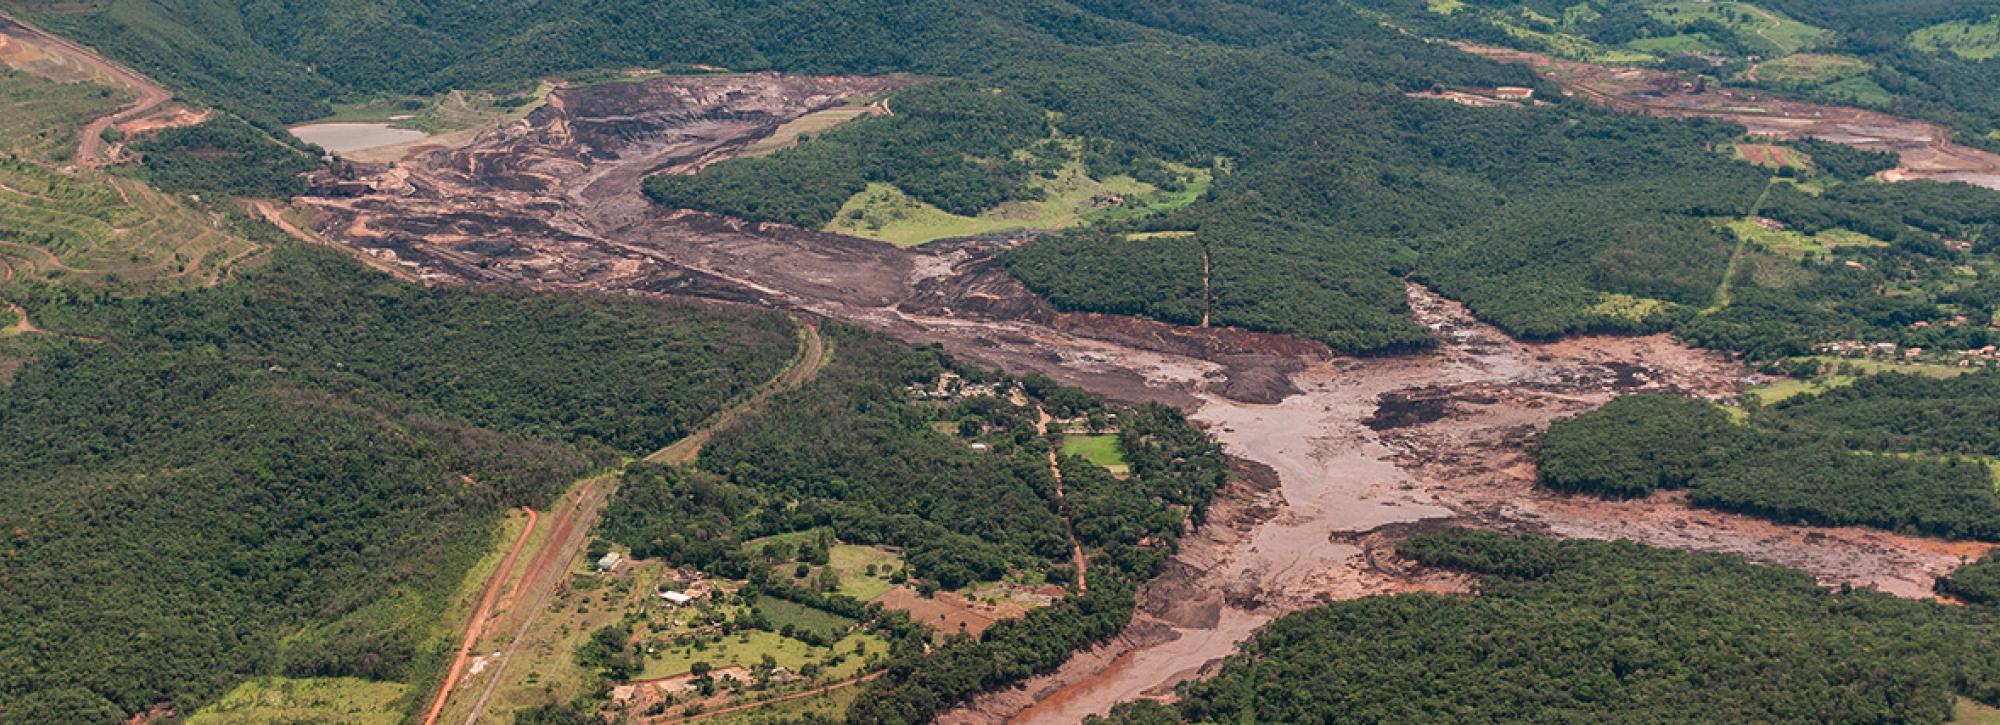 An aerial photo of the Brumadinho dam disaster in Brazil